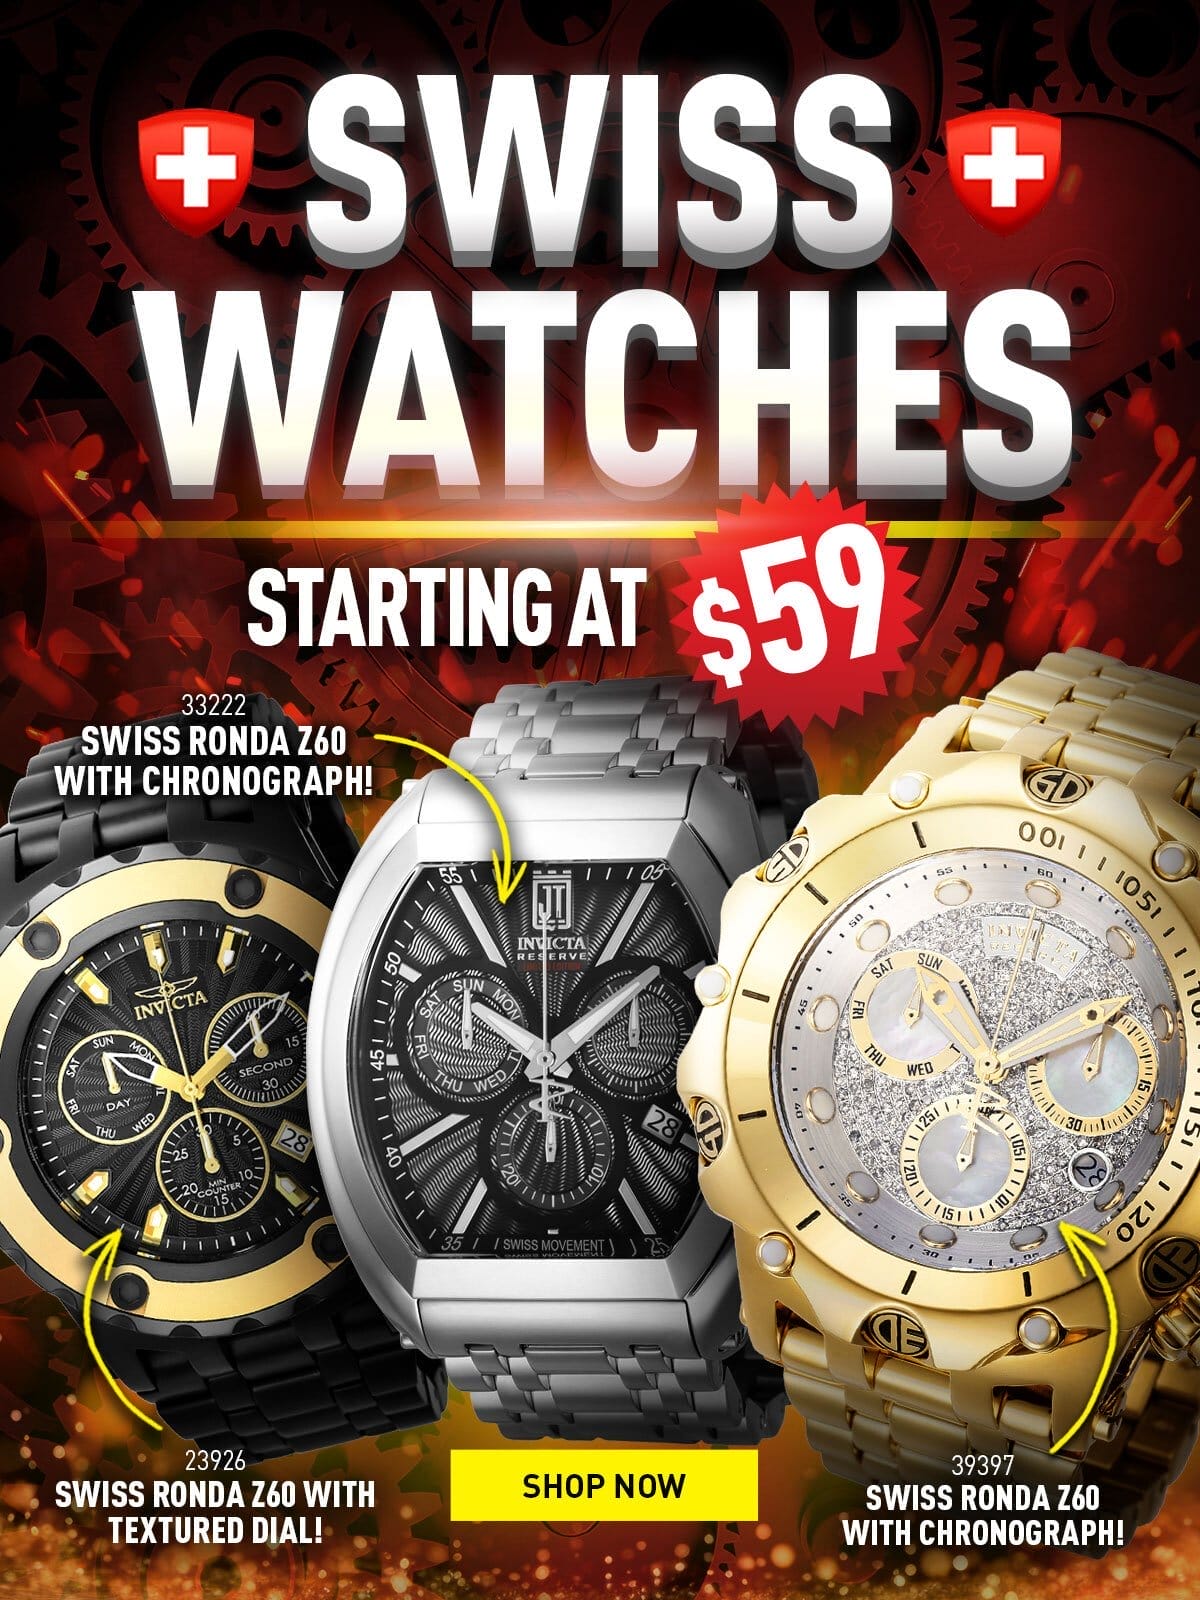 Swiss Watches - Starting at \\$59